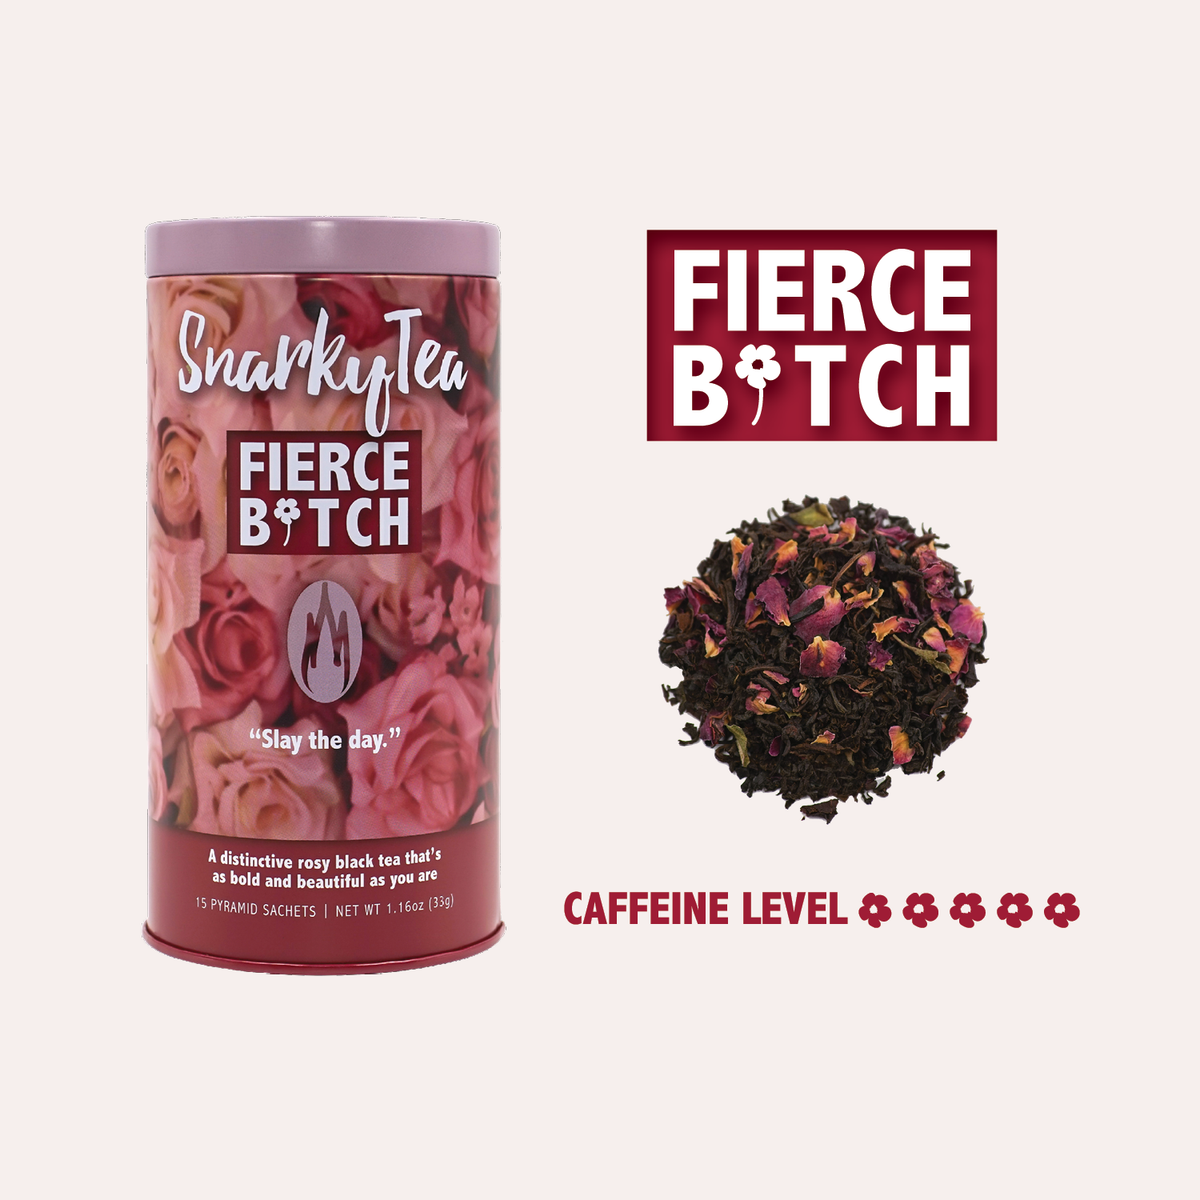 Fierce Bitch Black Tea